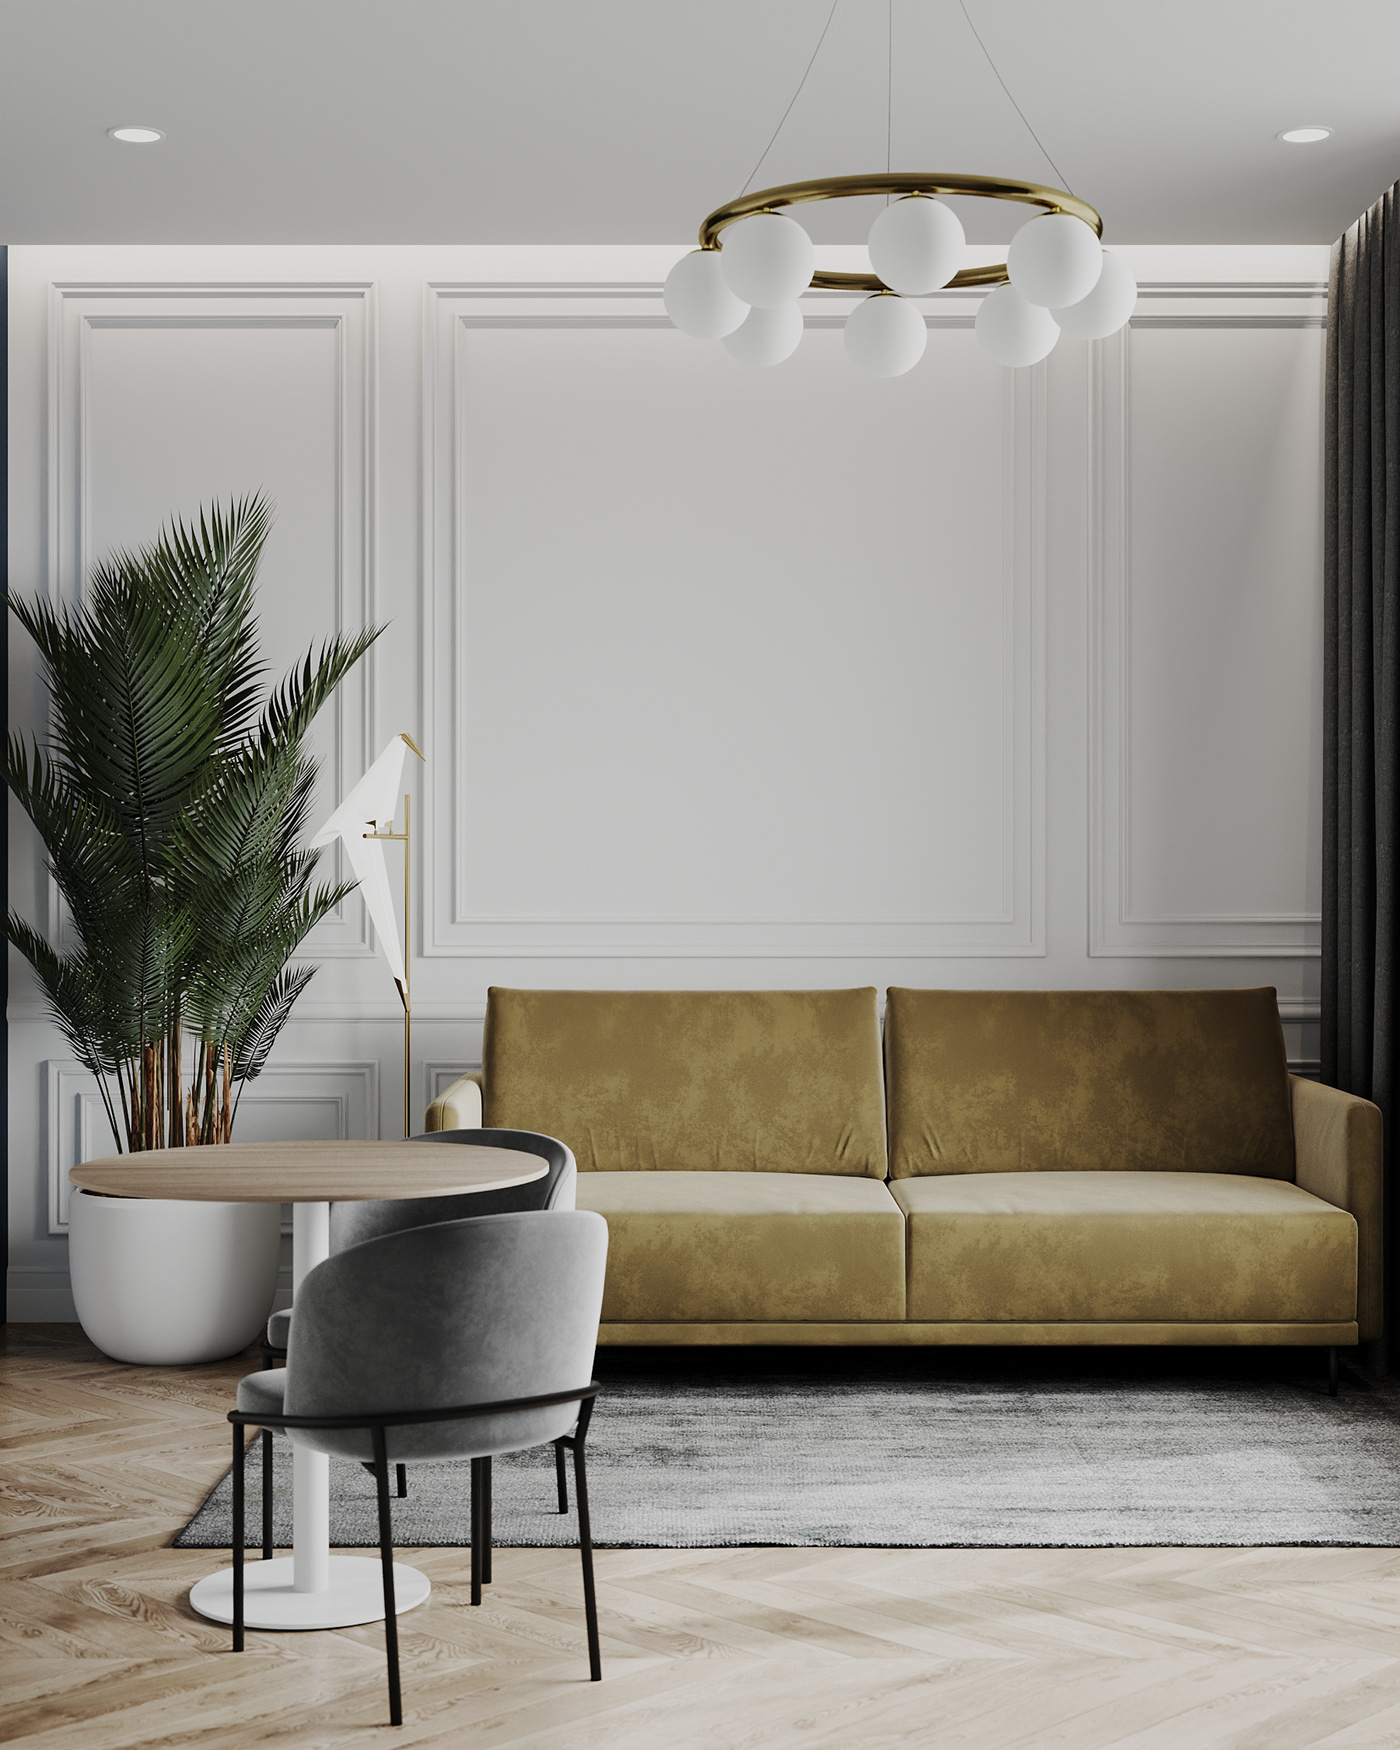 Classic Contemporary Classic Minimalism minimalistic stusio apartment Tropical